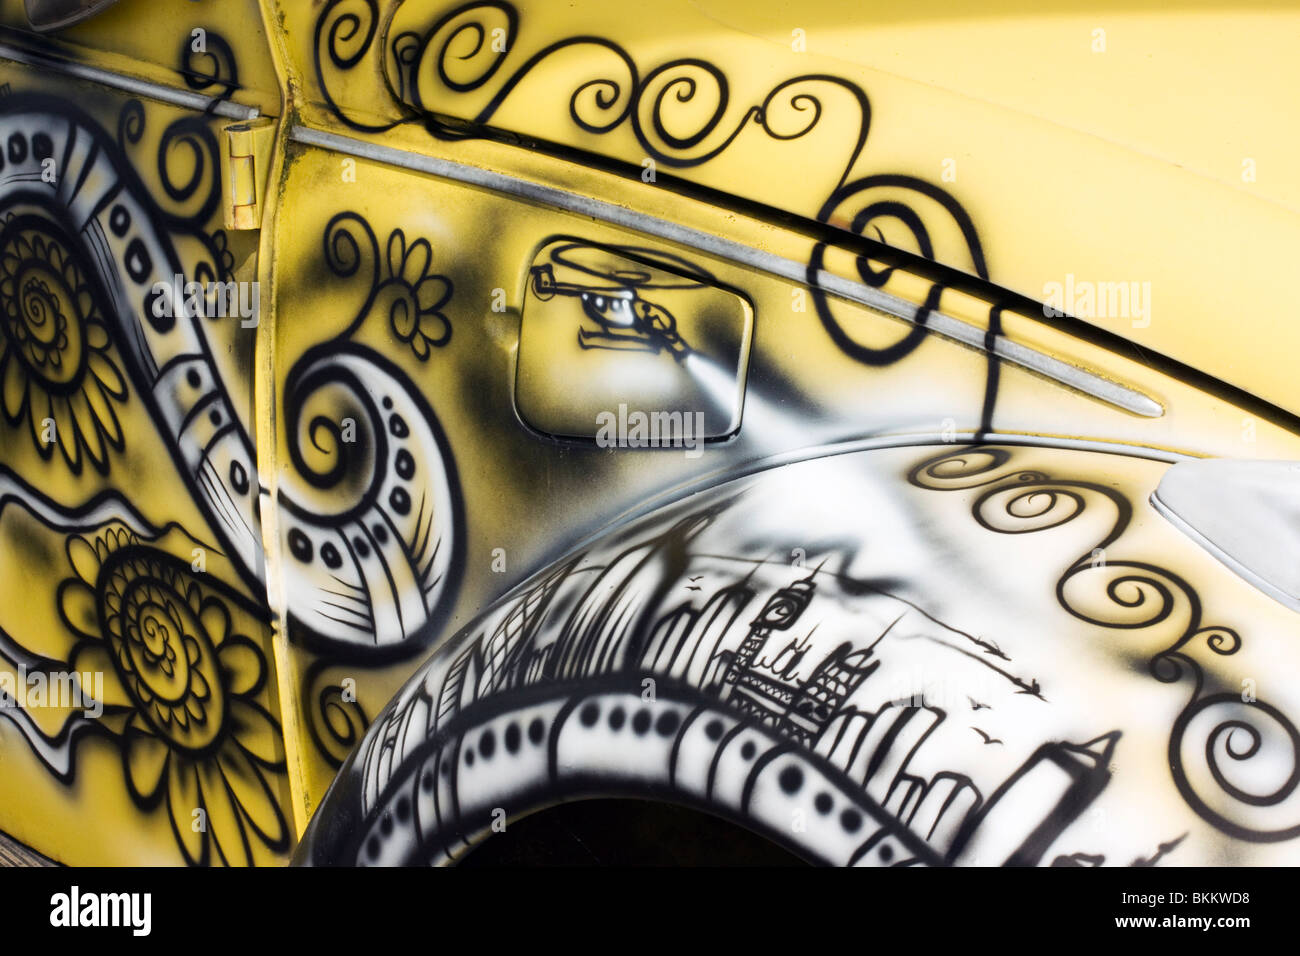 A Volkswagen Beetle Spray Painted with Graffiti Art At the Big Bang VW Show  Santa Pod England Stock Photo - Alamy